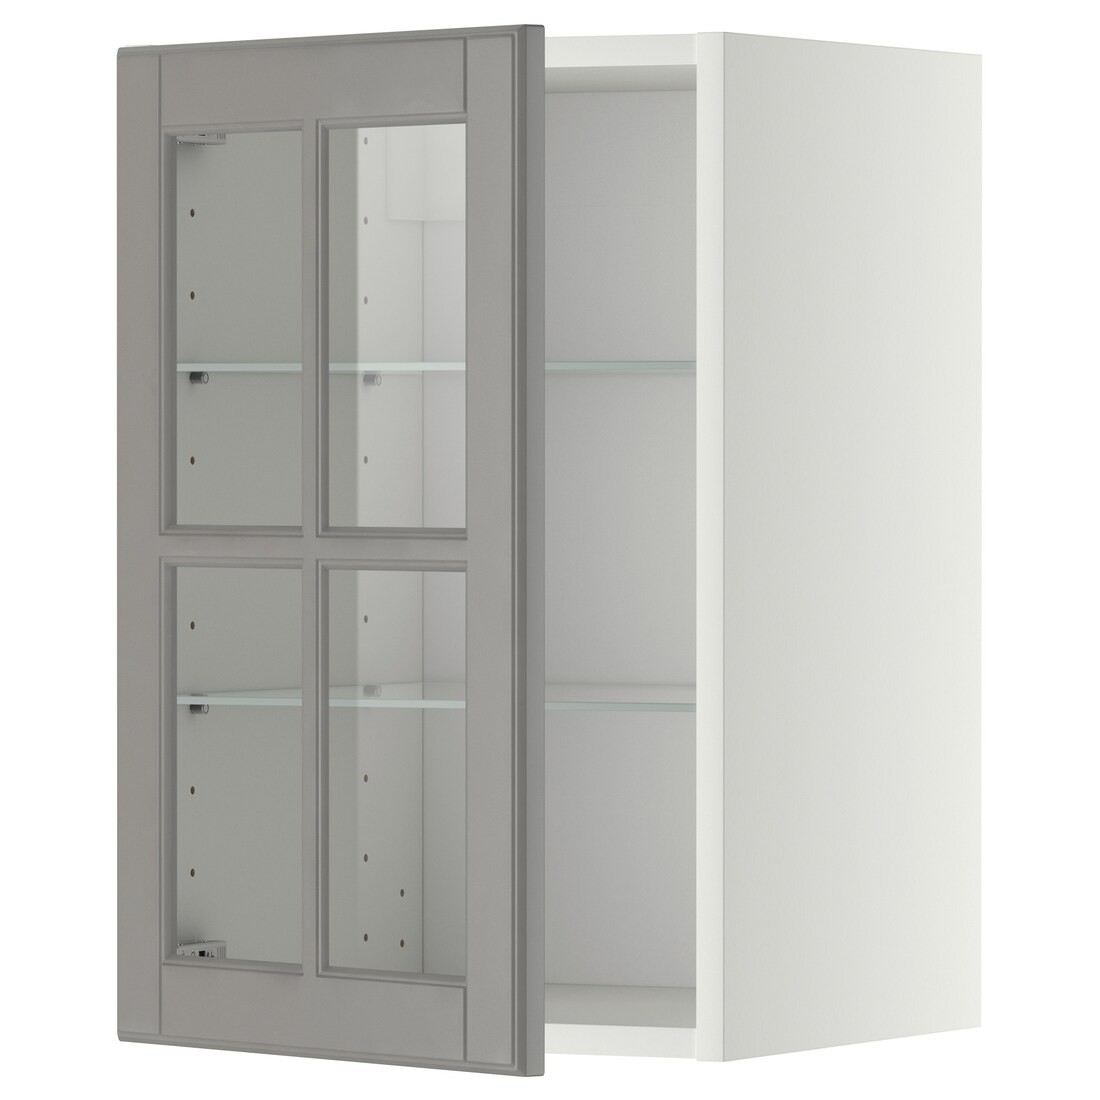 METOD МЕТОД Навесной шкаф, белый / Bodbyn серый, 40x60 см